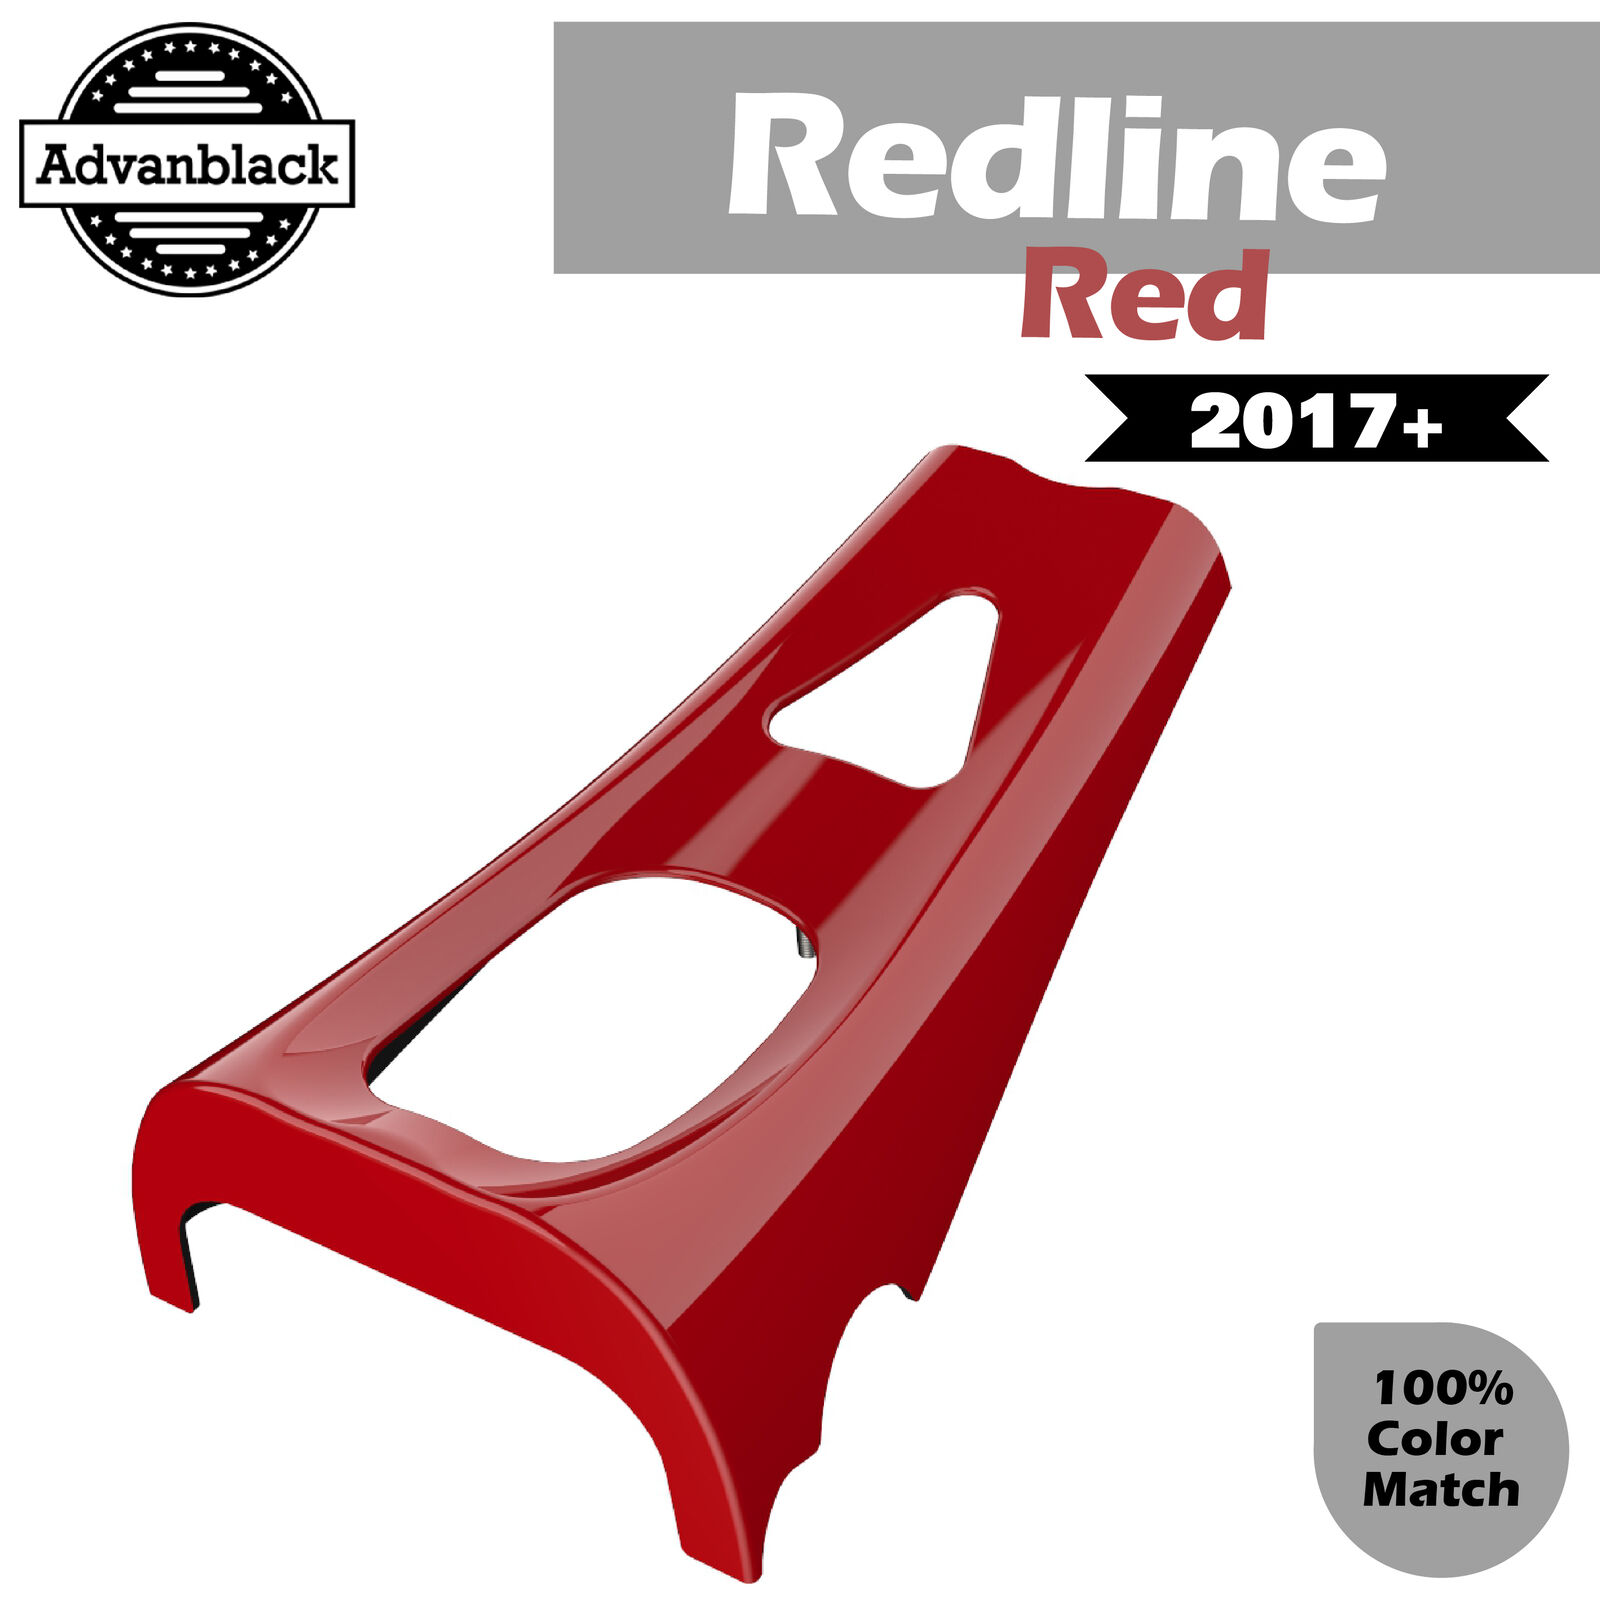 Redline Red ABS Chin Spoiler For Harley Street Road Glide 2017+ M8